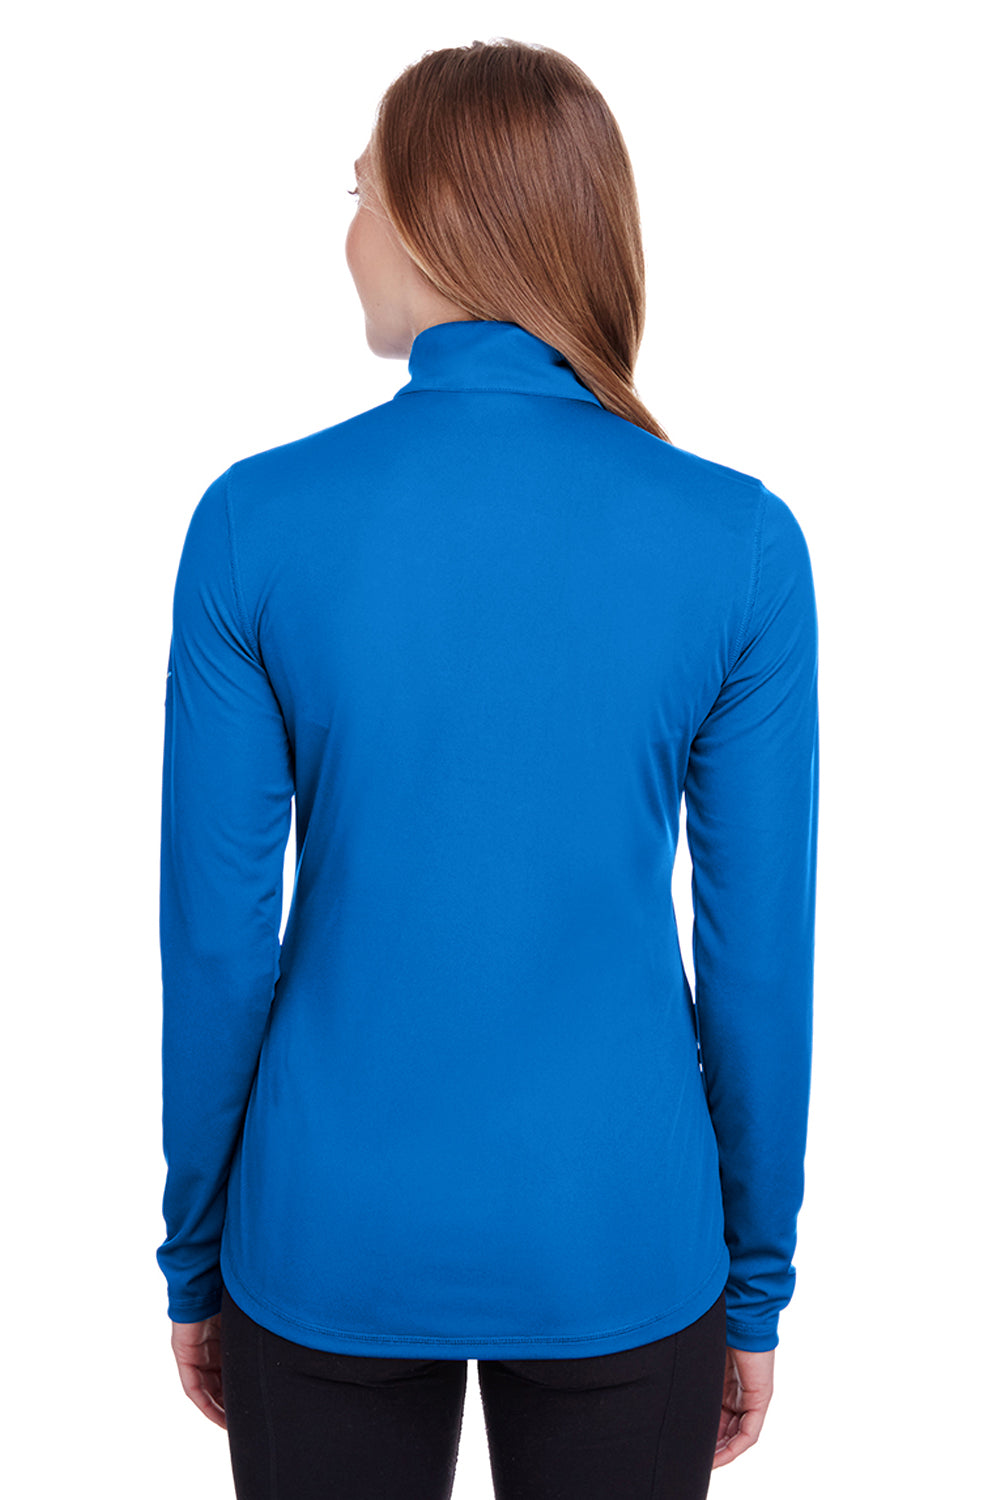 Puma 596803 Womens Icon Performance Moisture Wicking Full Zip Sweatshirt Royal Blue Back